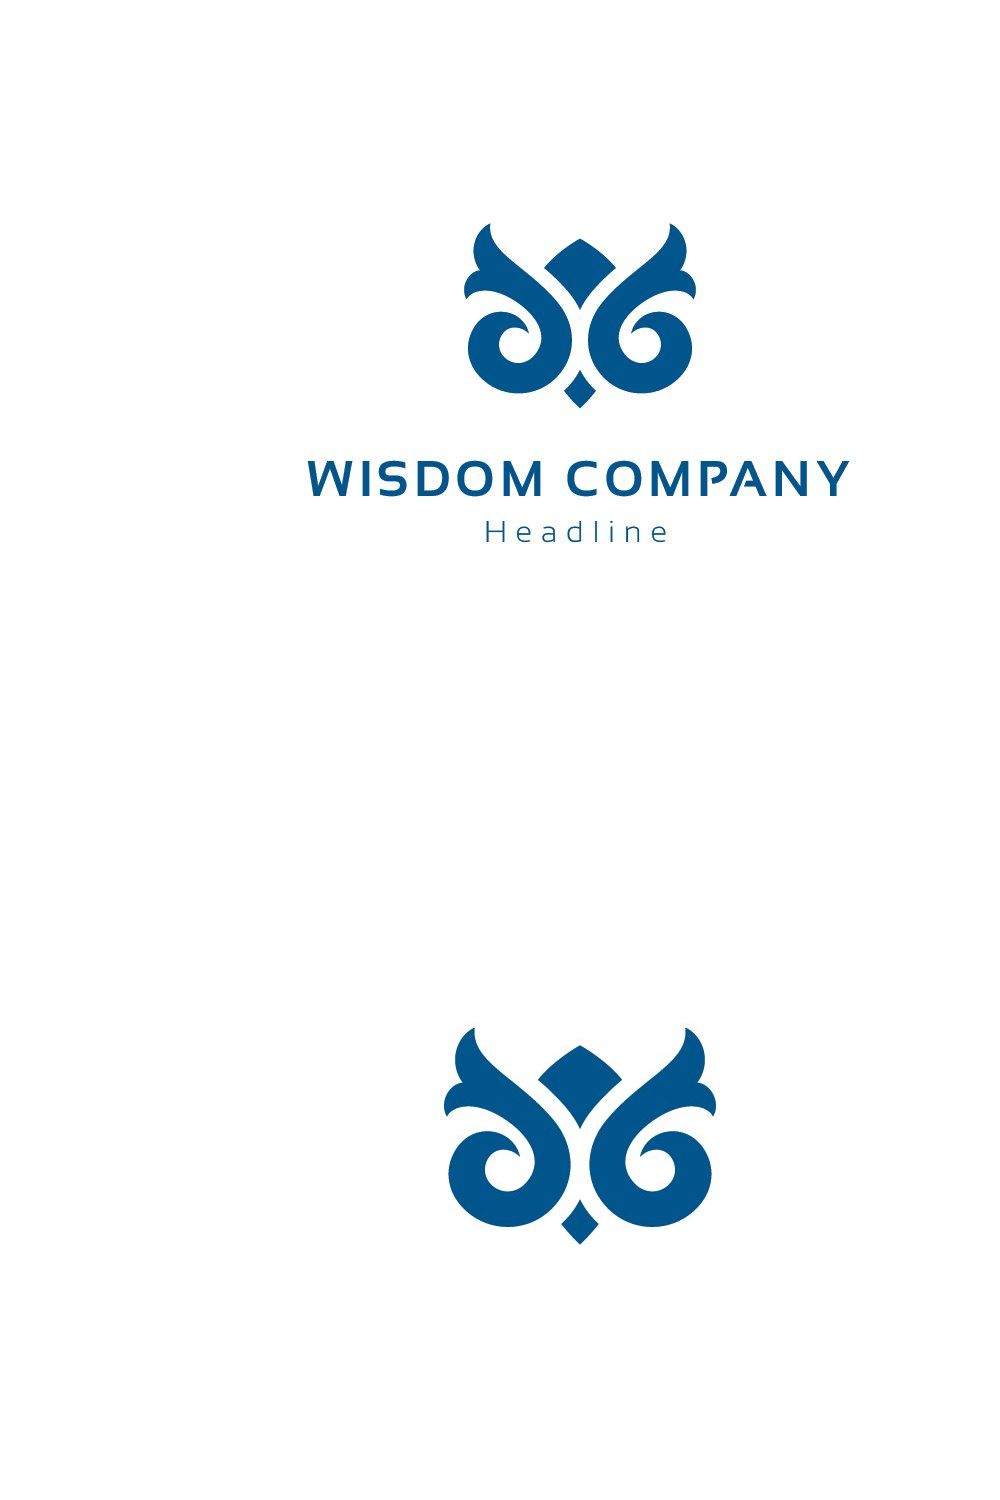 Wisdom company logo. pinterest preview image.